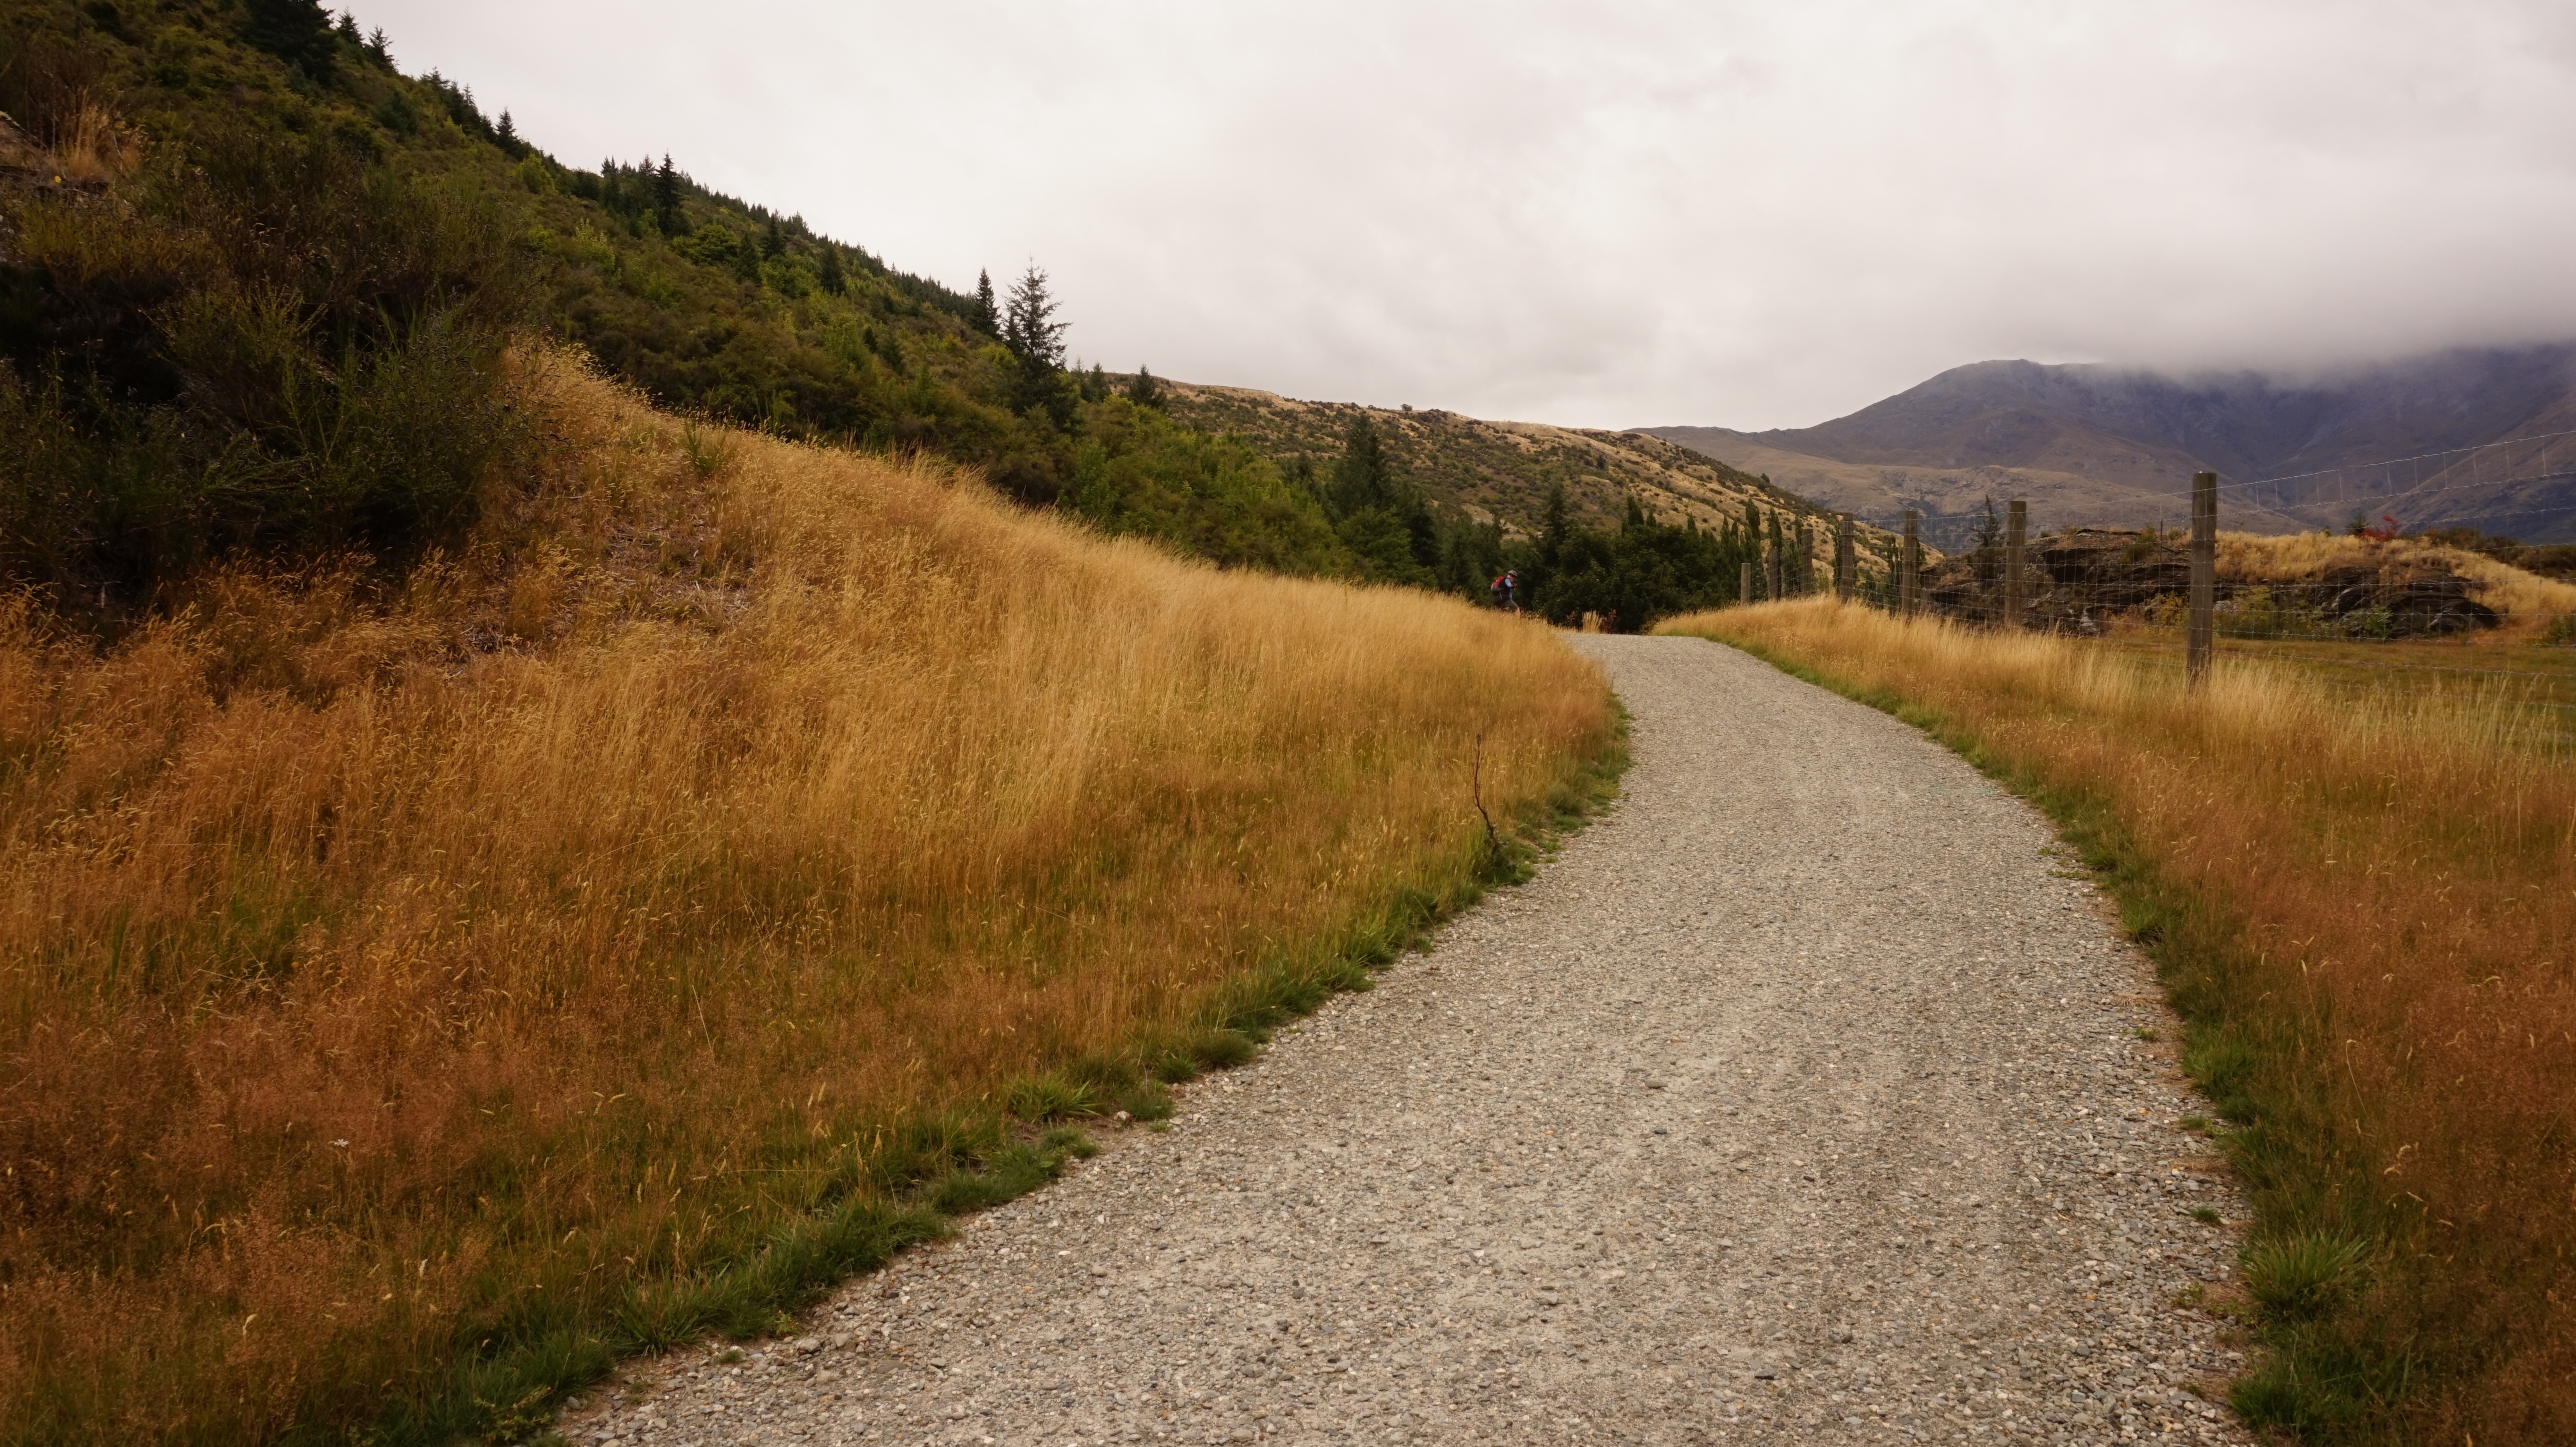 gray road in between brown grass field